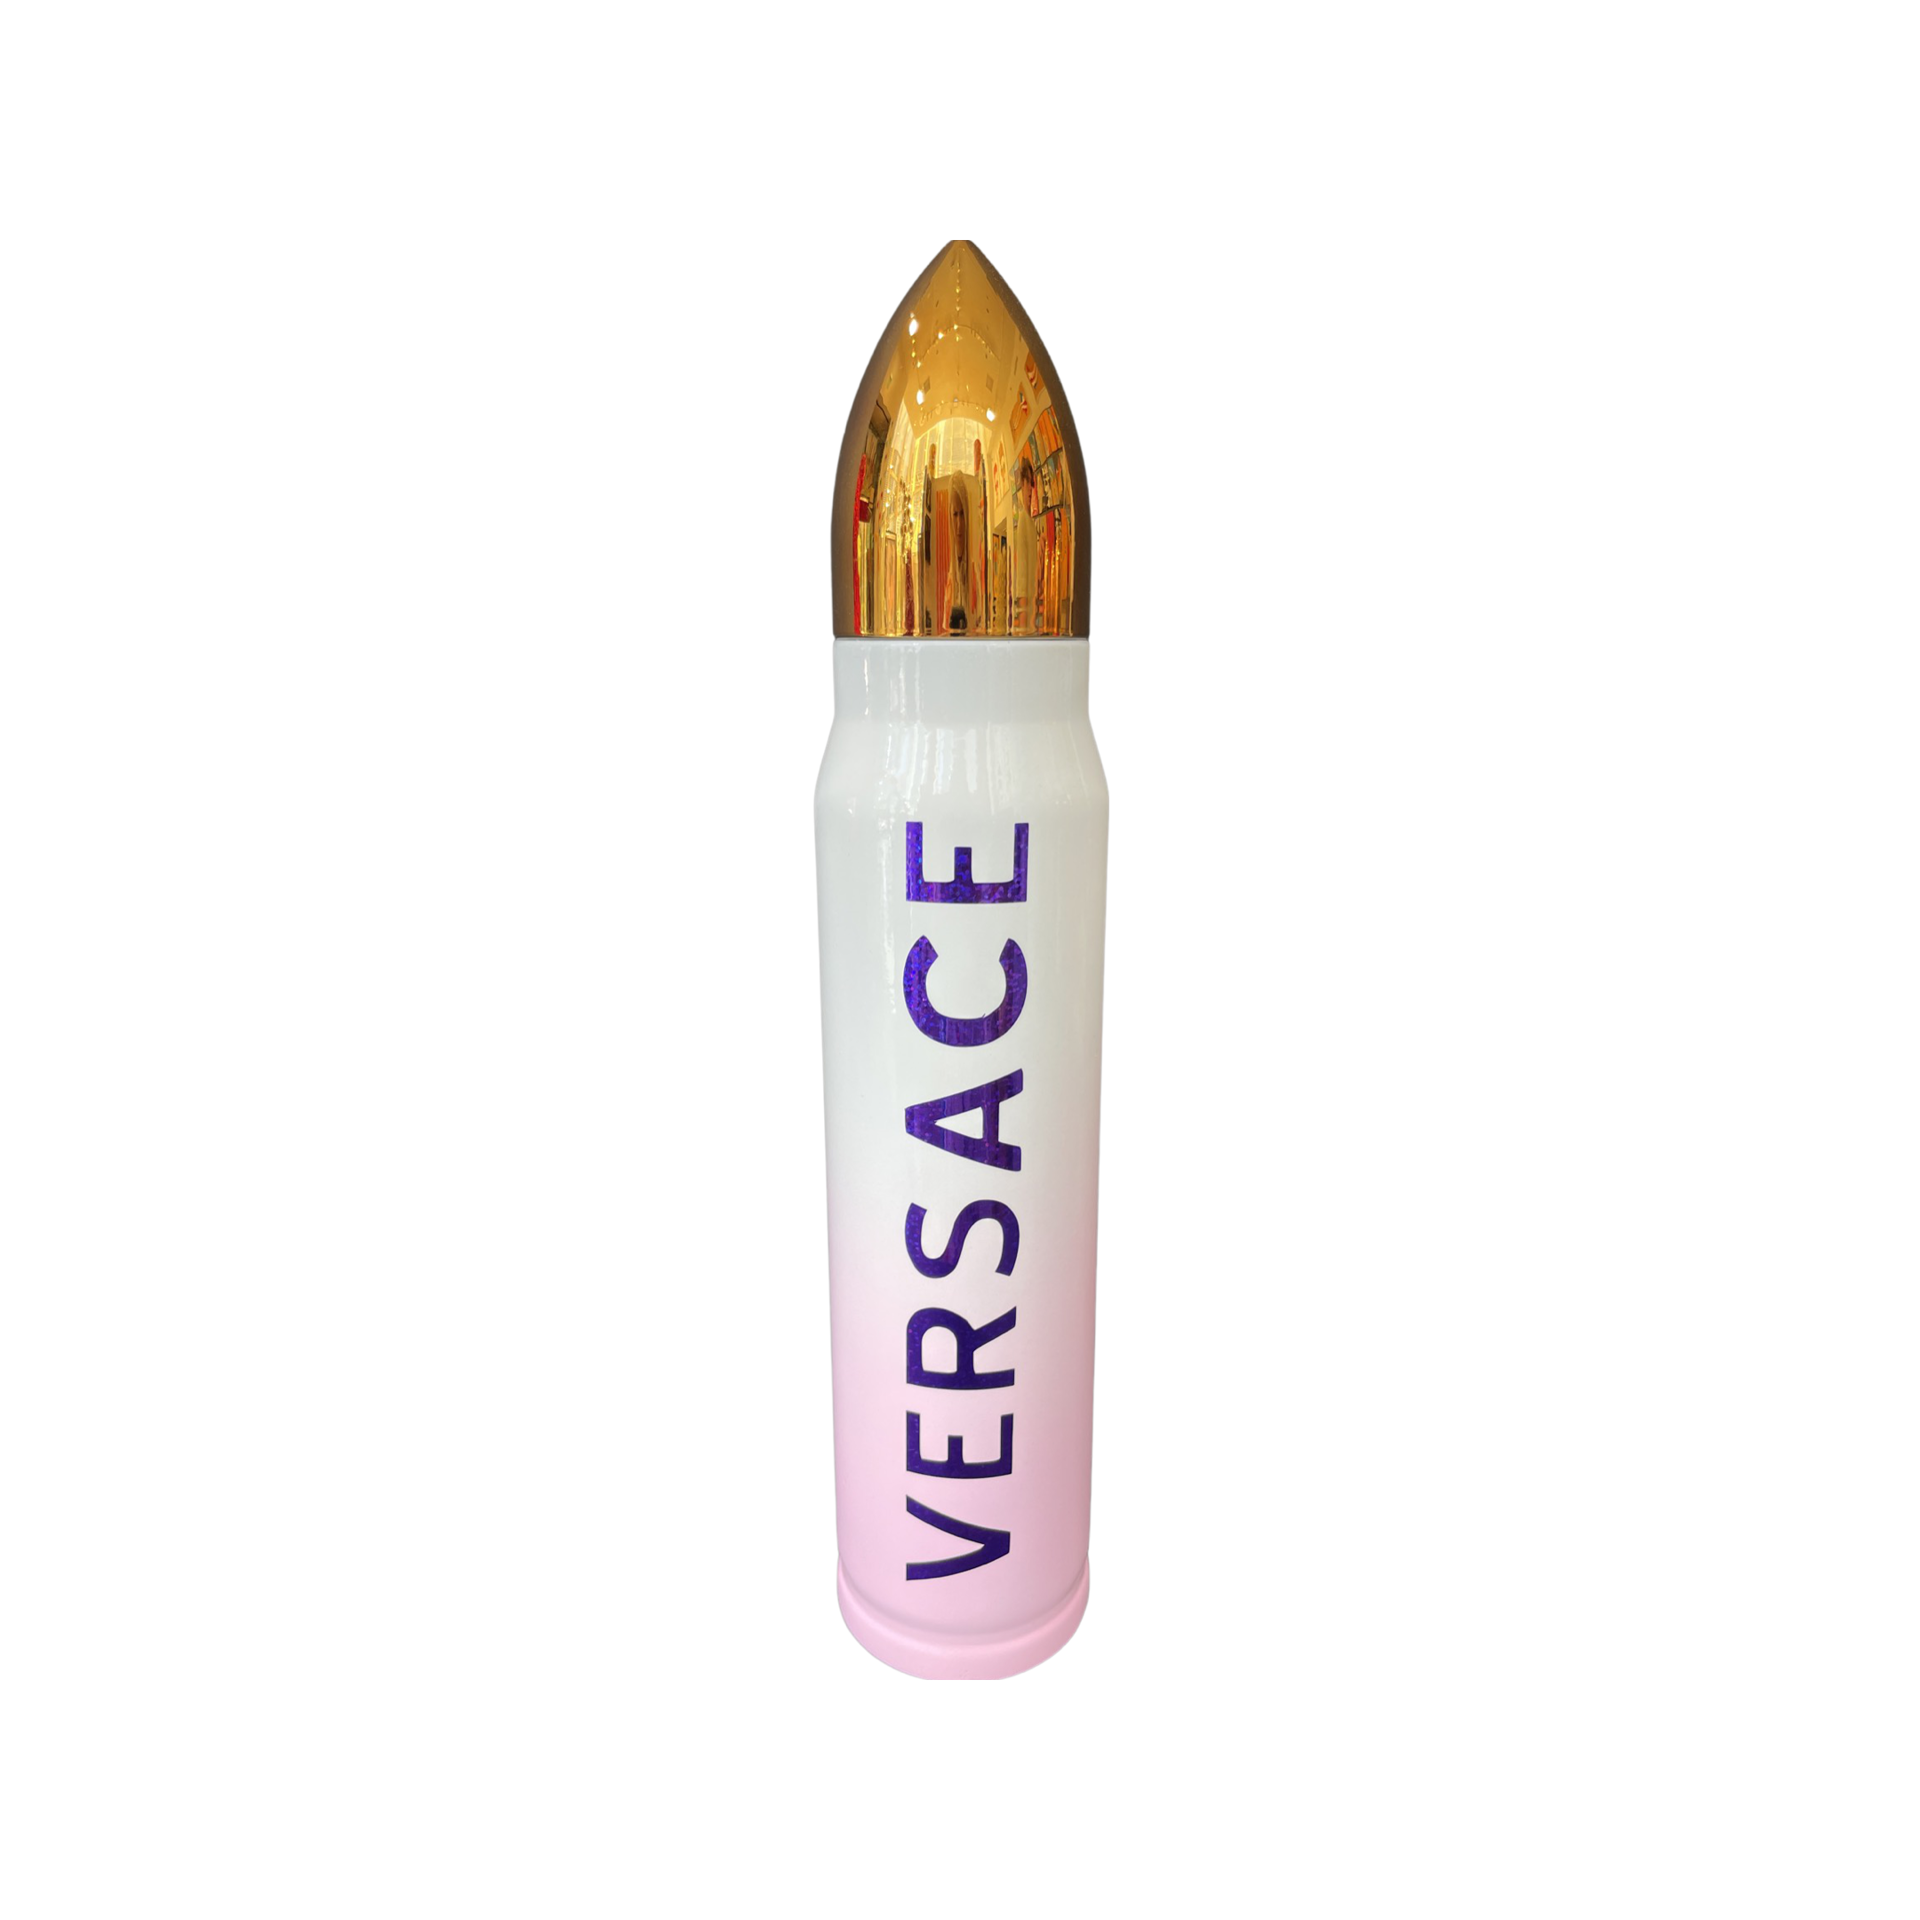 "Versace" White/Pink by "Peaceful Brand Bullets" by Efi Mashiah